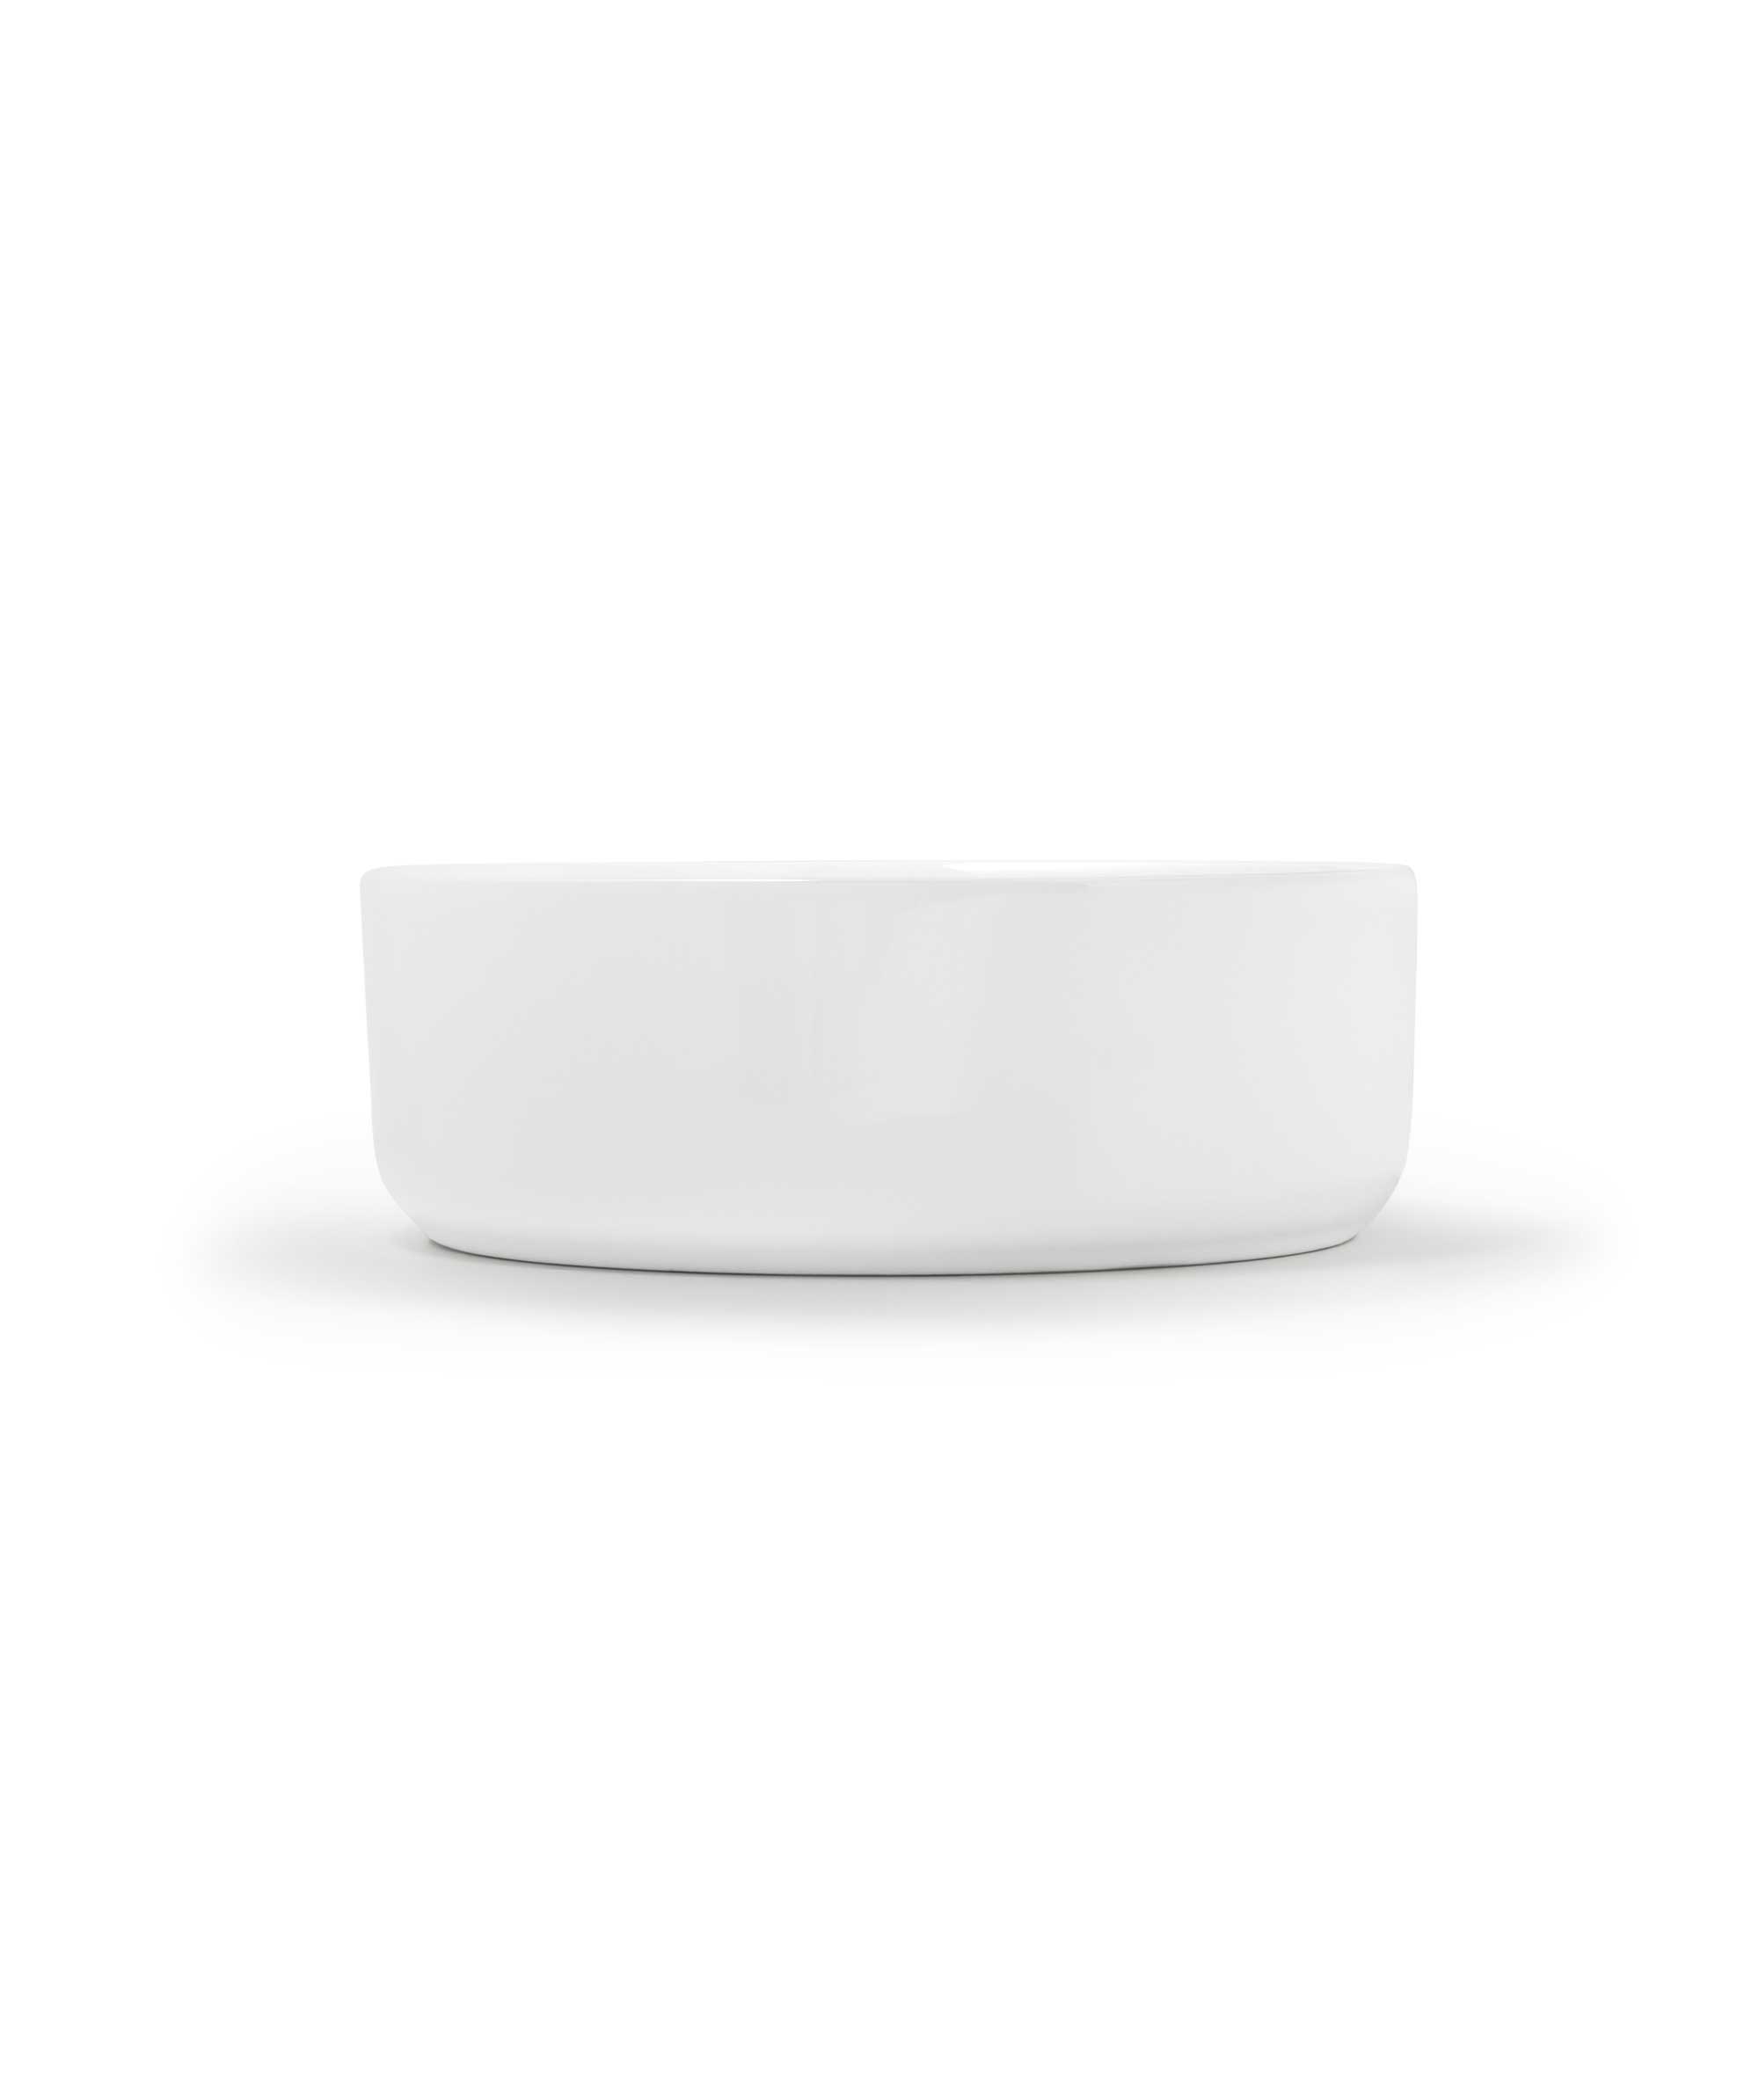 Arko 310 - White Gloss - compact size